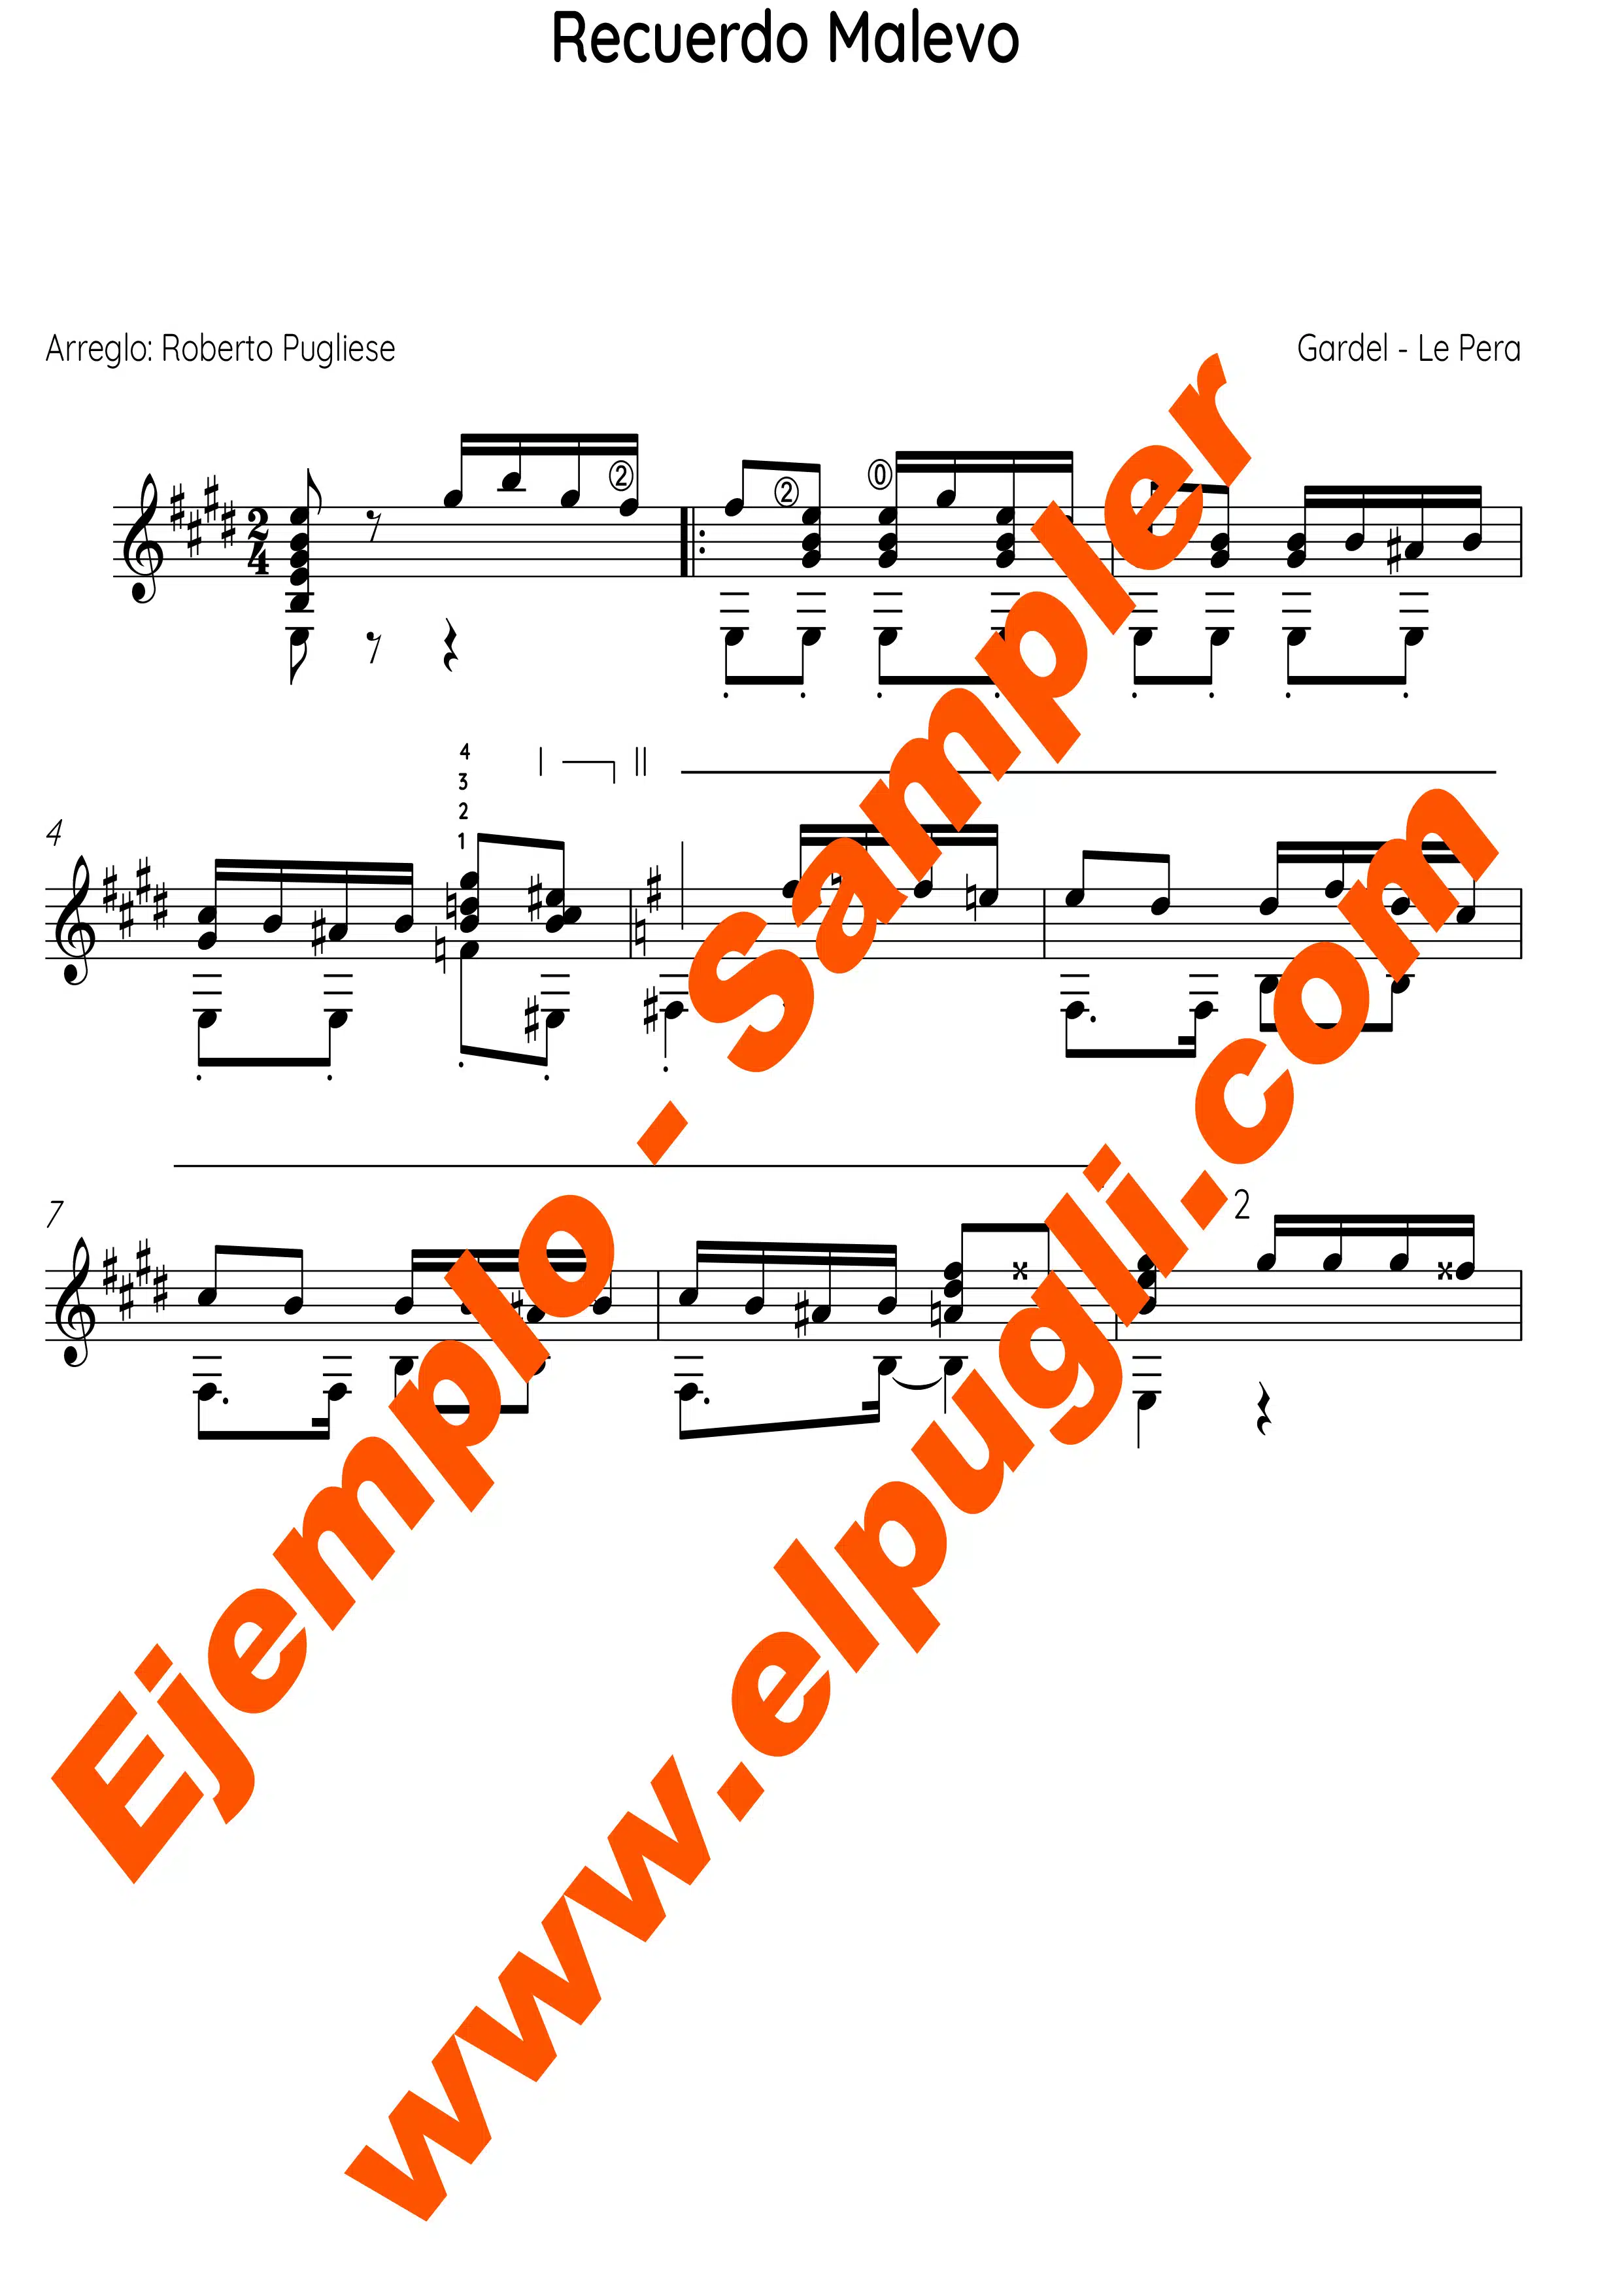 Recuerdo Malevo 🎼 Score classical guitar. Mp3 free